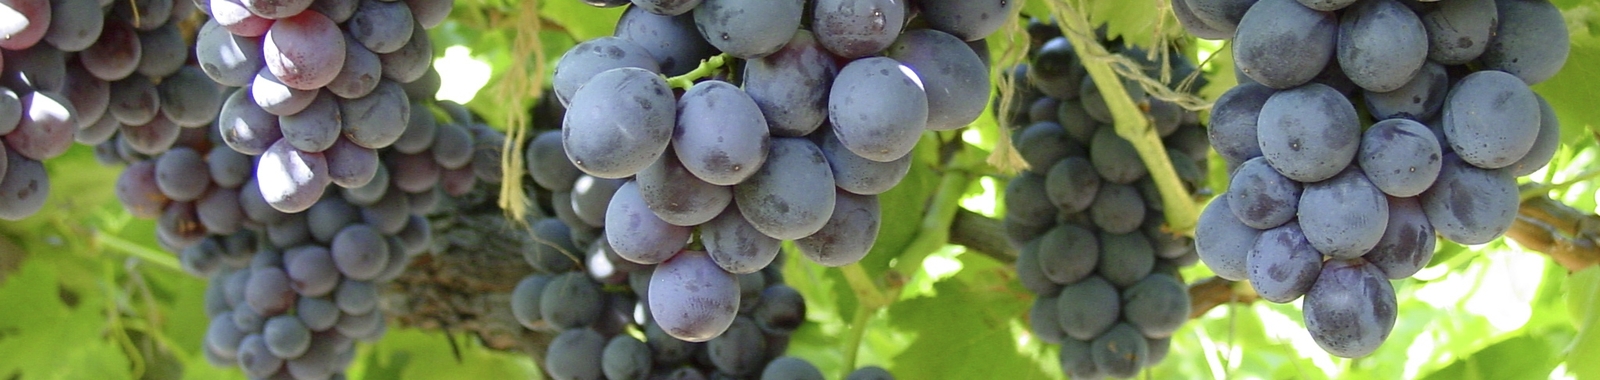 Influir en la sanidad vegetal de la uva de mesa